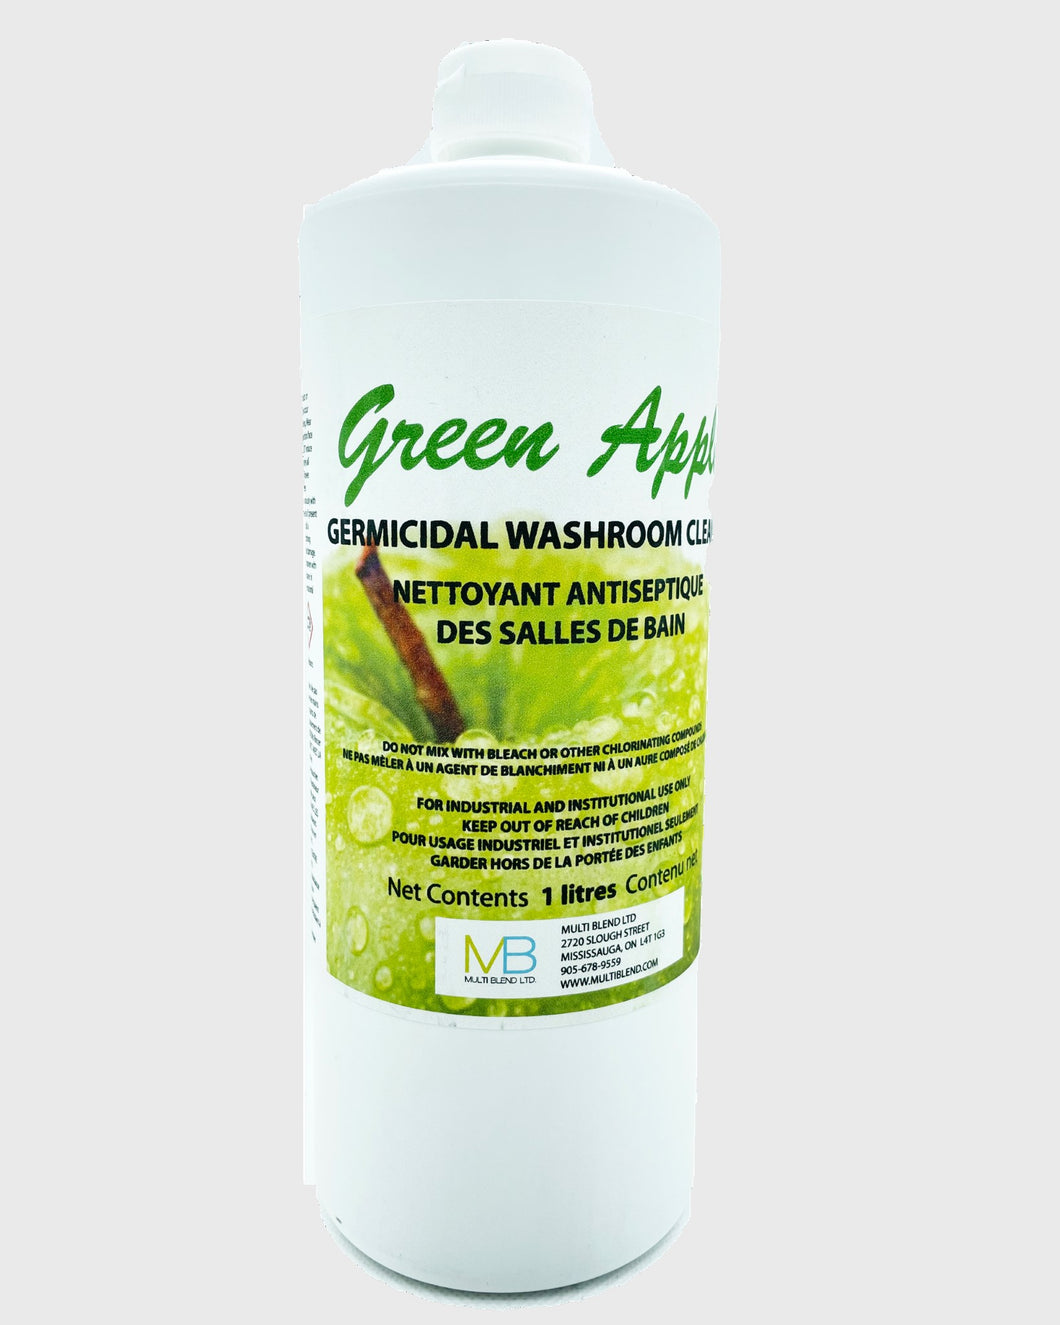 Green Apple Germicidal Washroom Cleaner